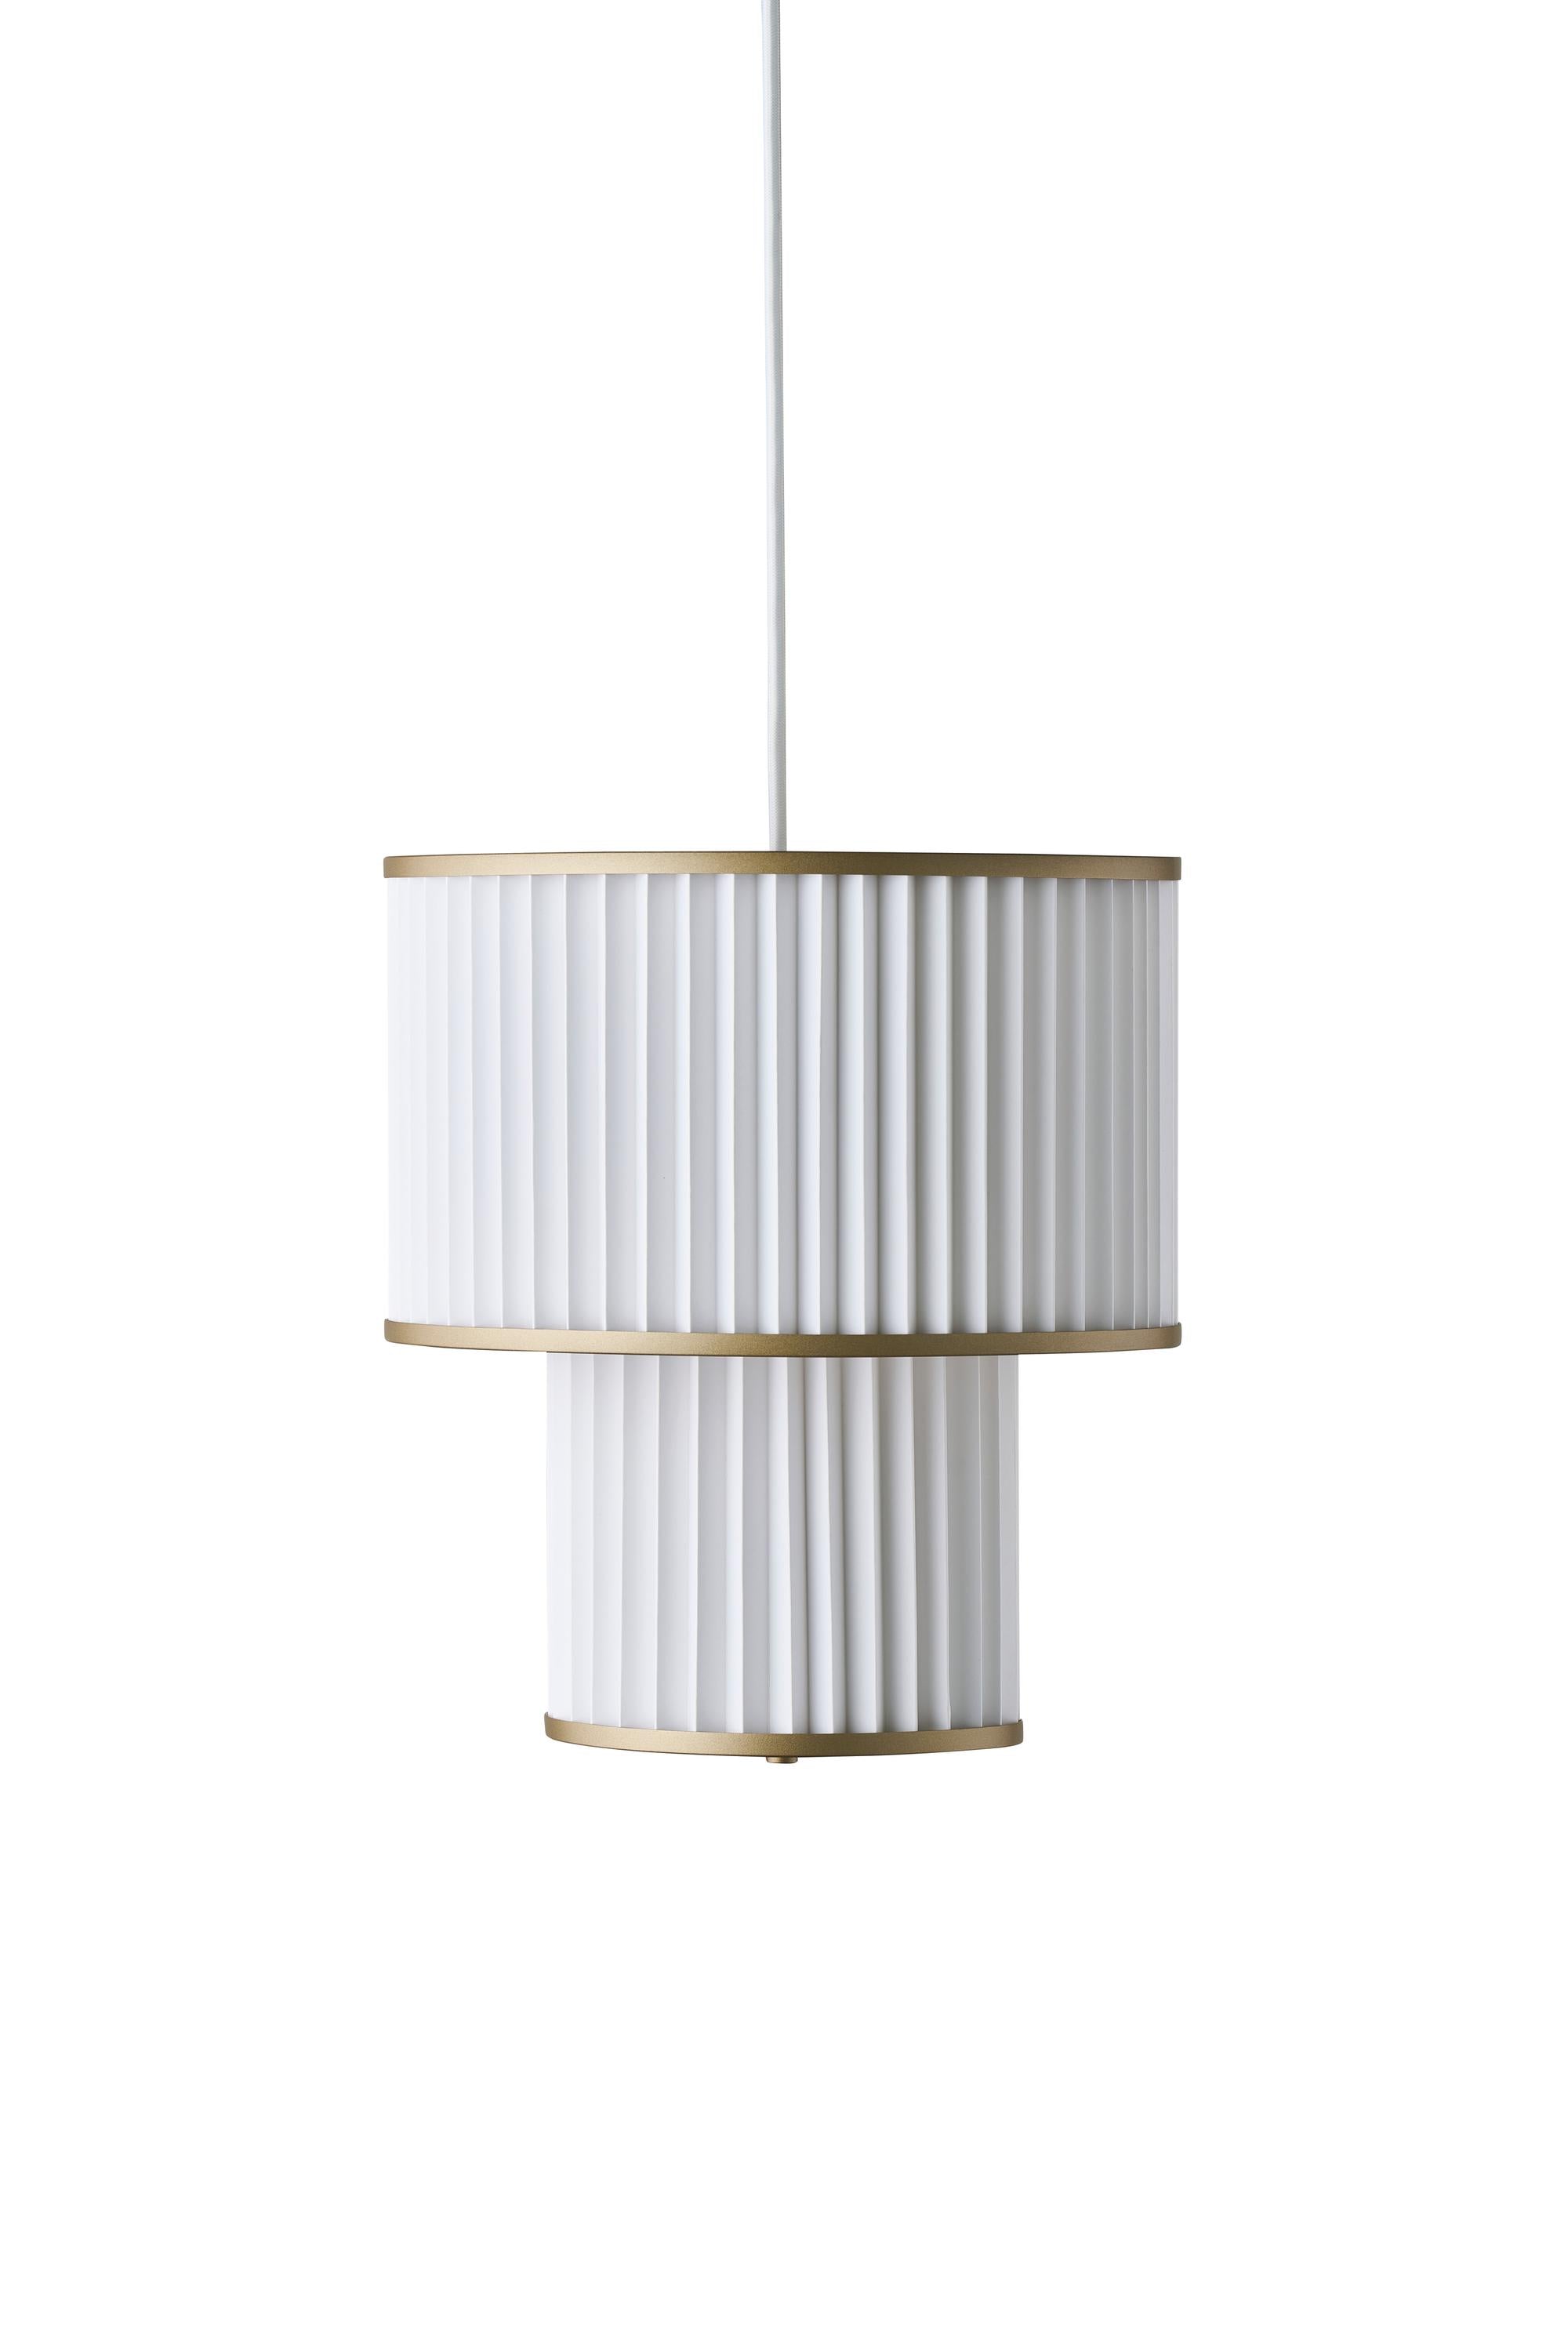 Le Klint Plivello Suspension Lamp Golden/White With 2 Shades (S M)